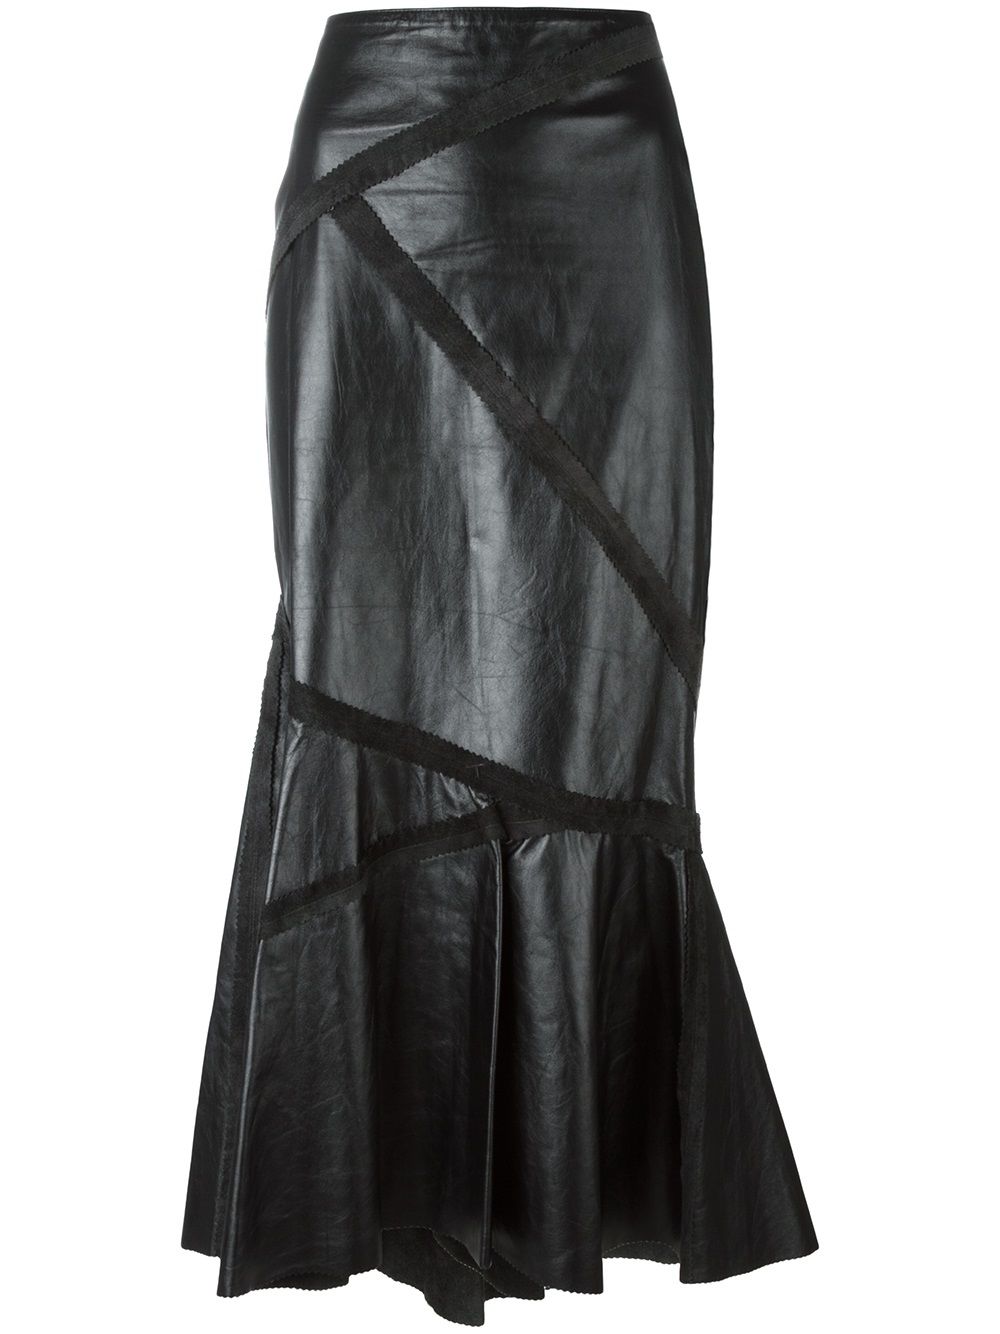 Jean Paul Gaultier Vintage Long Leather Skirt $808 - Buy VINTAGE Online ...